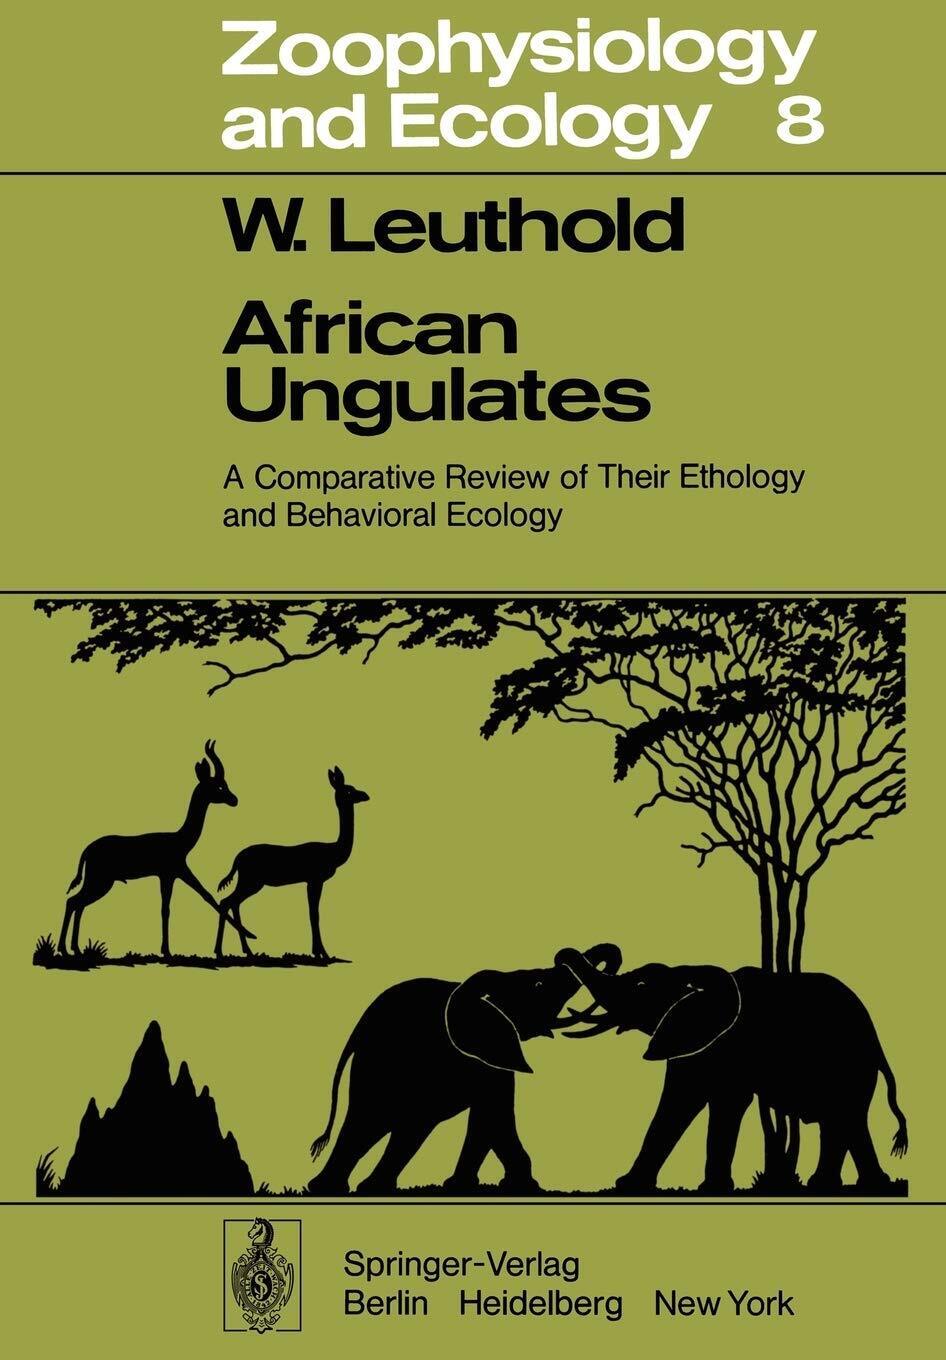 African Ungulates - Walter Leuthold - Springer, 2011